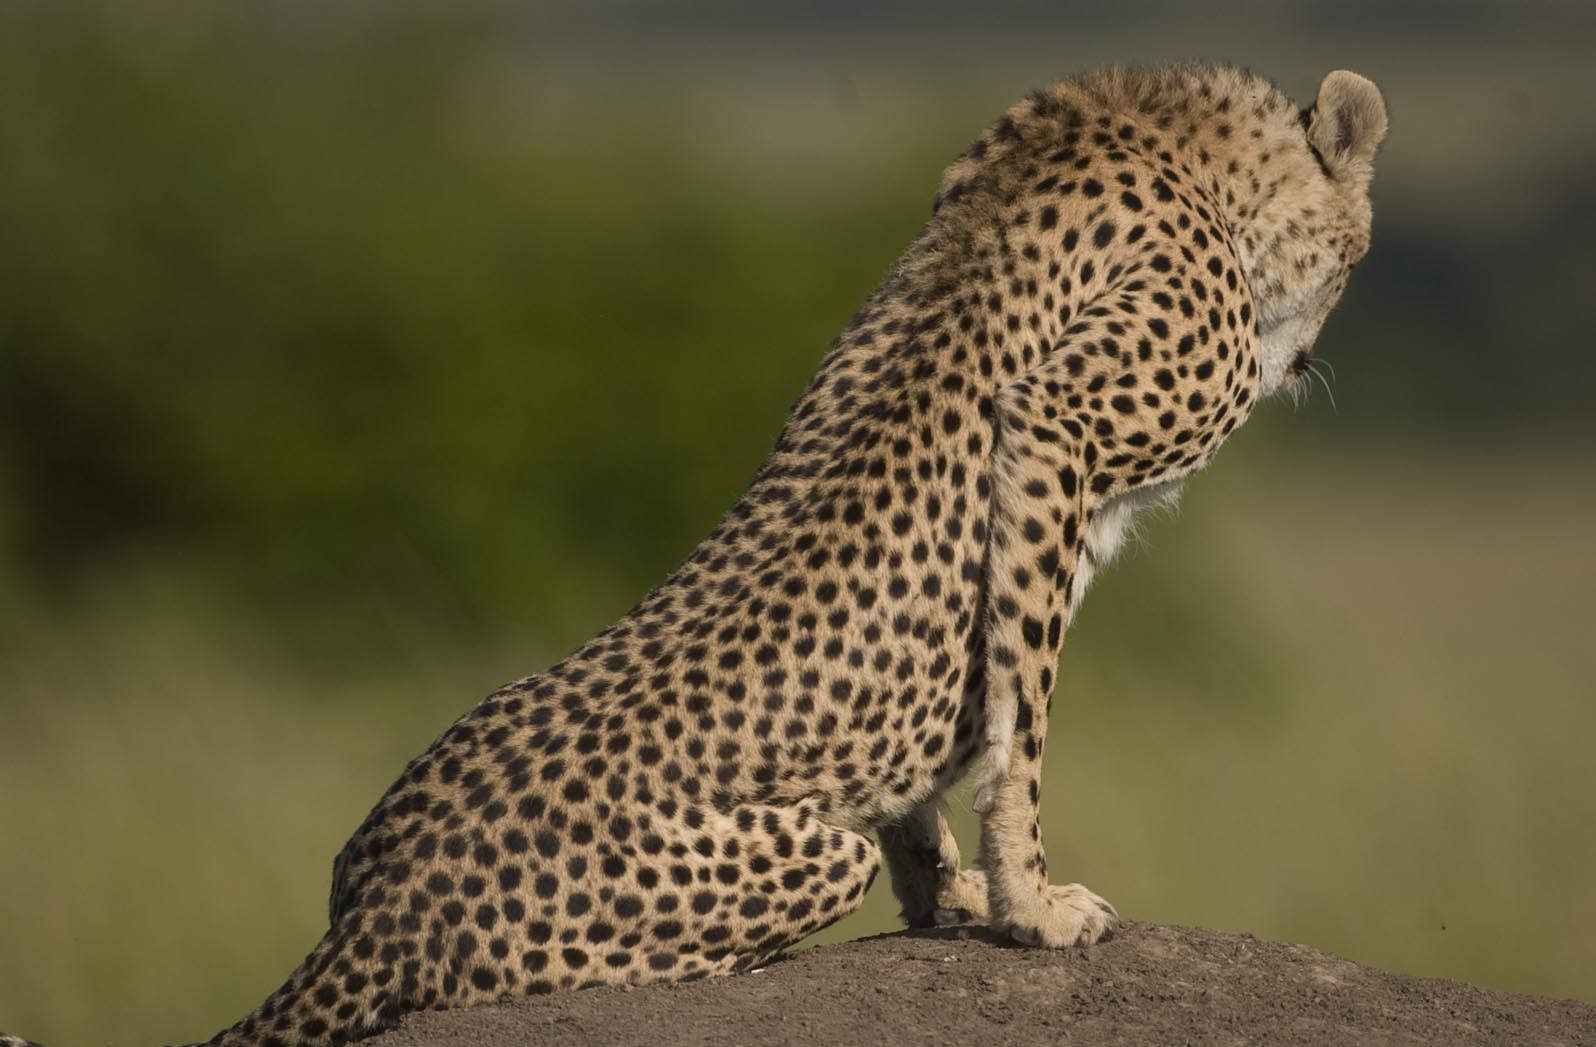 Lepa fotografija geparda